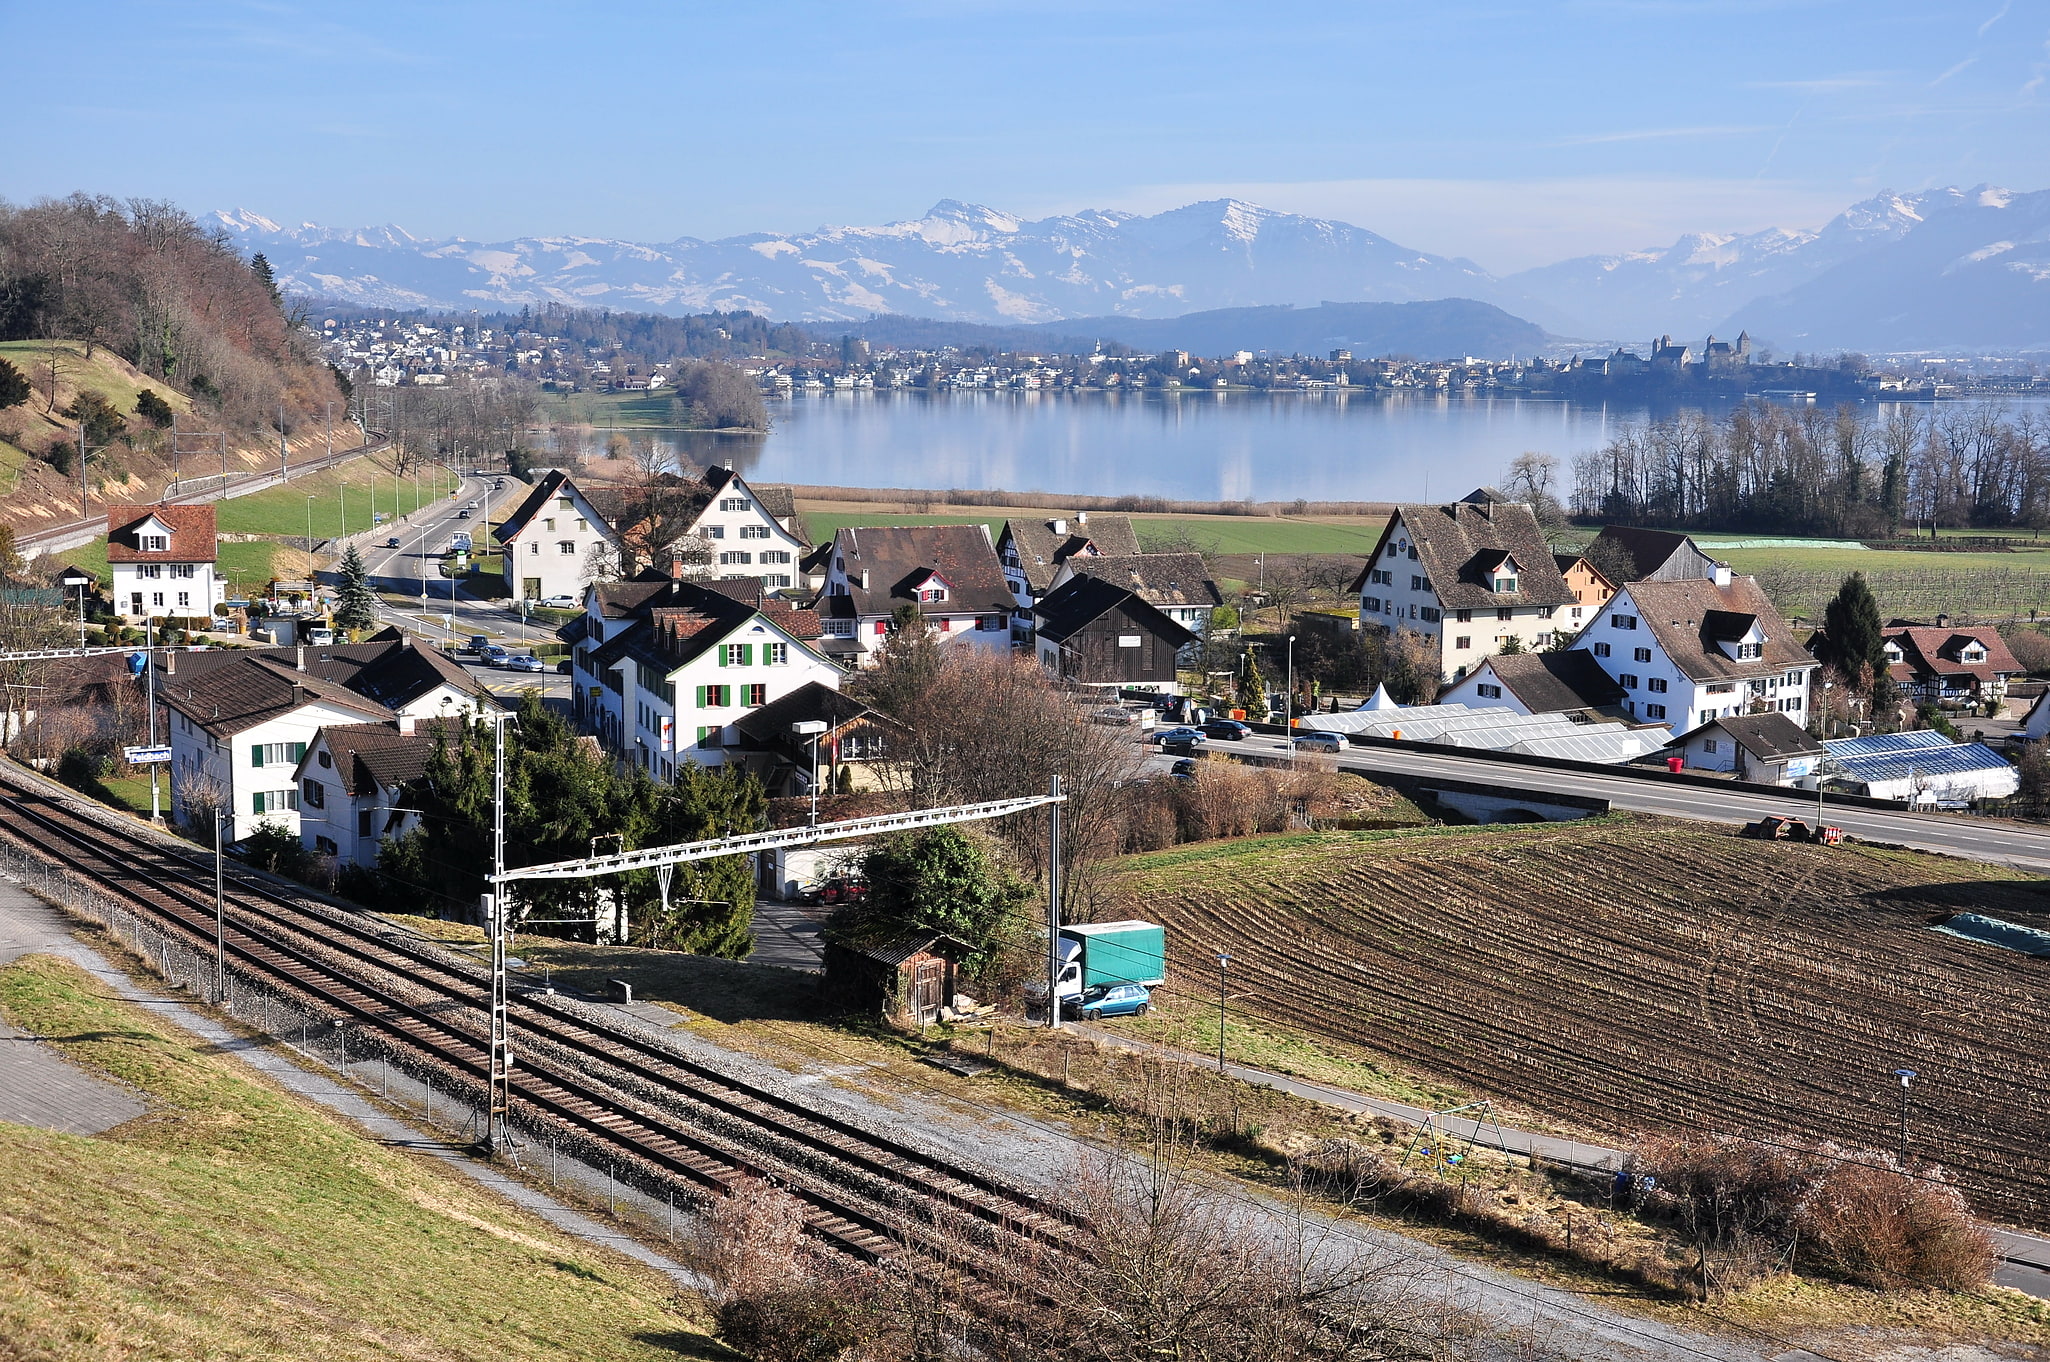 Hombrechtikon, Switzerland